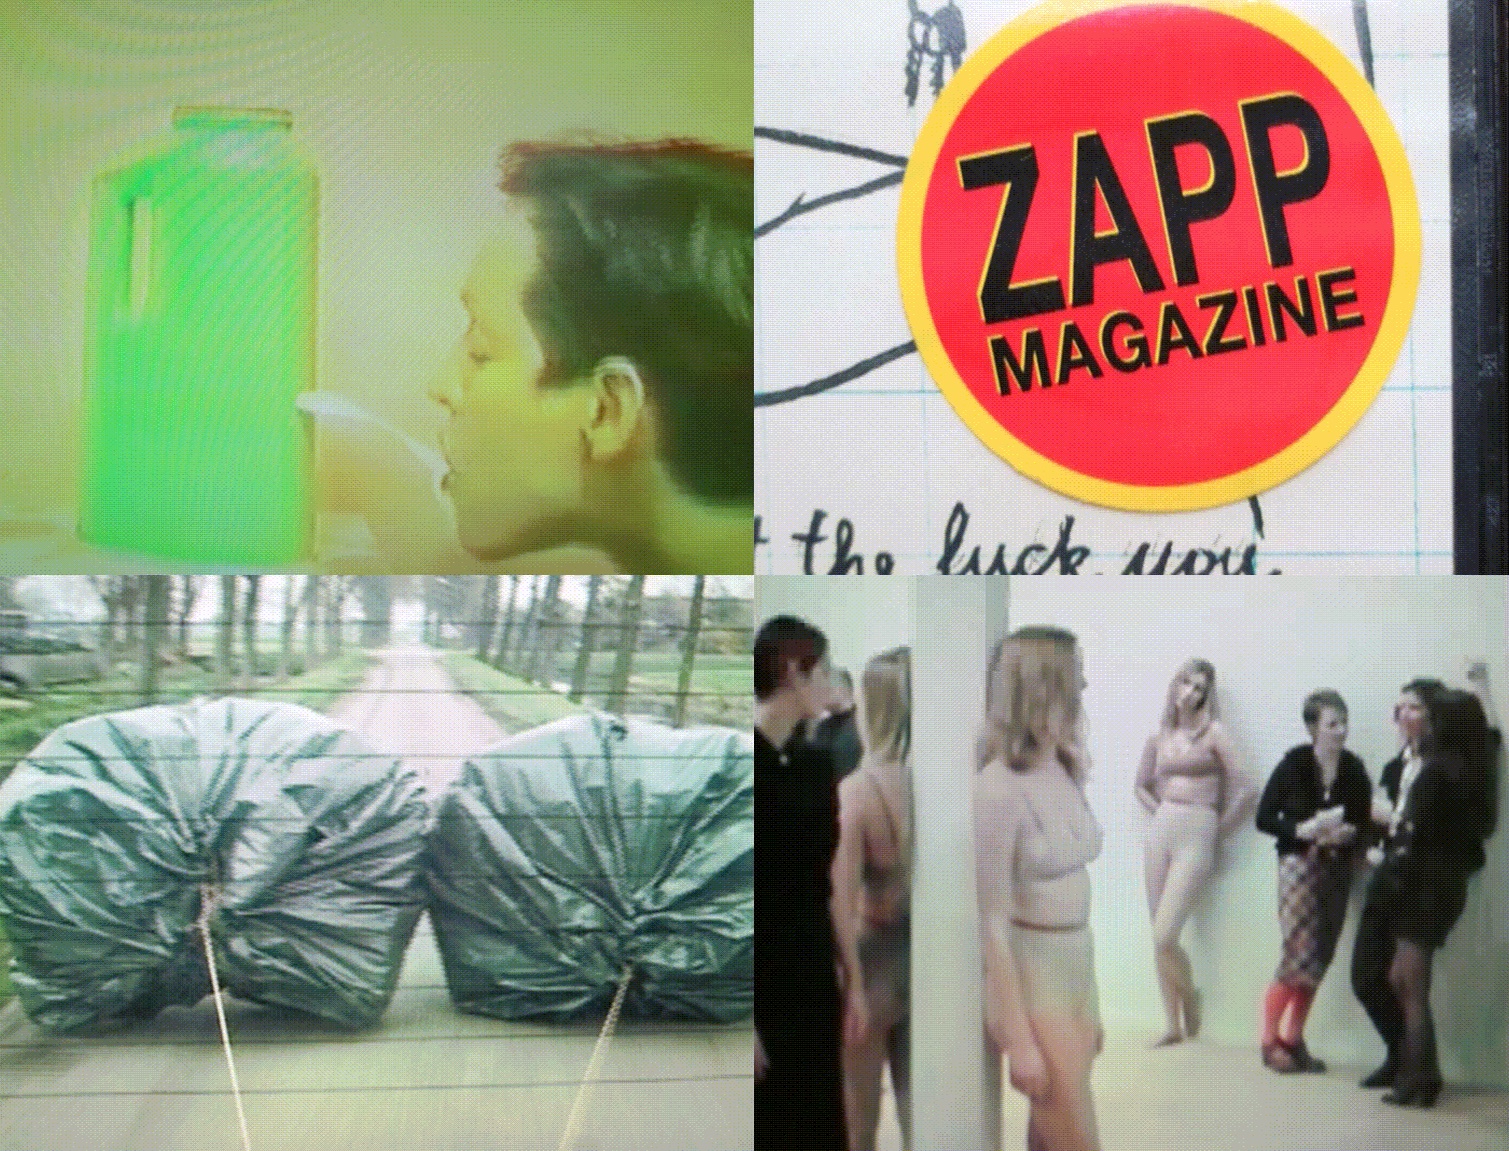 ZAPP magazine